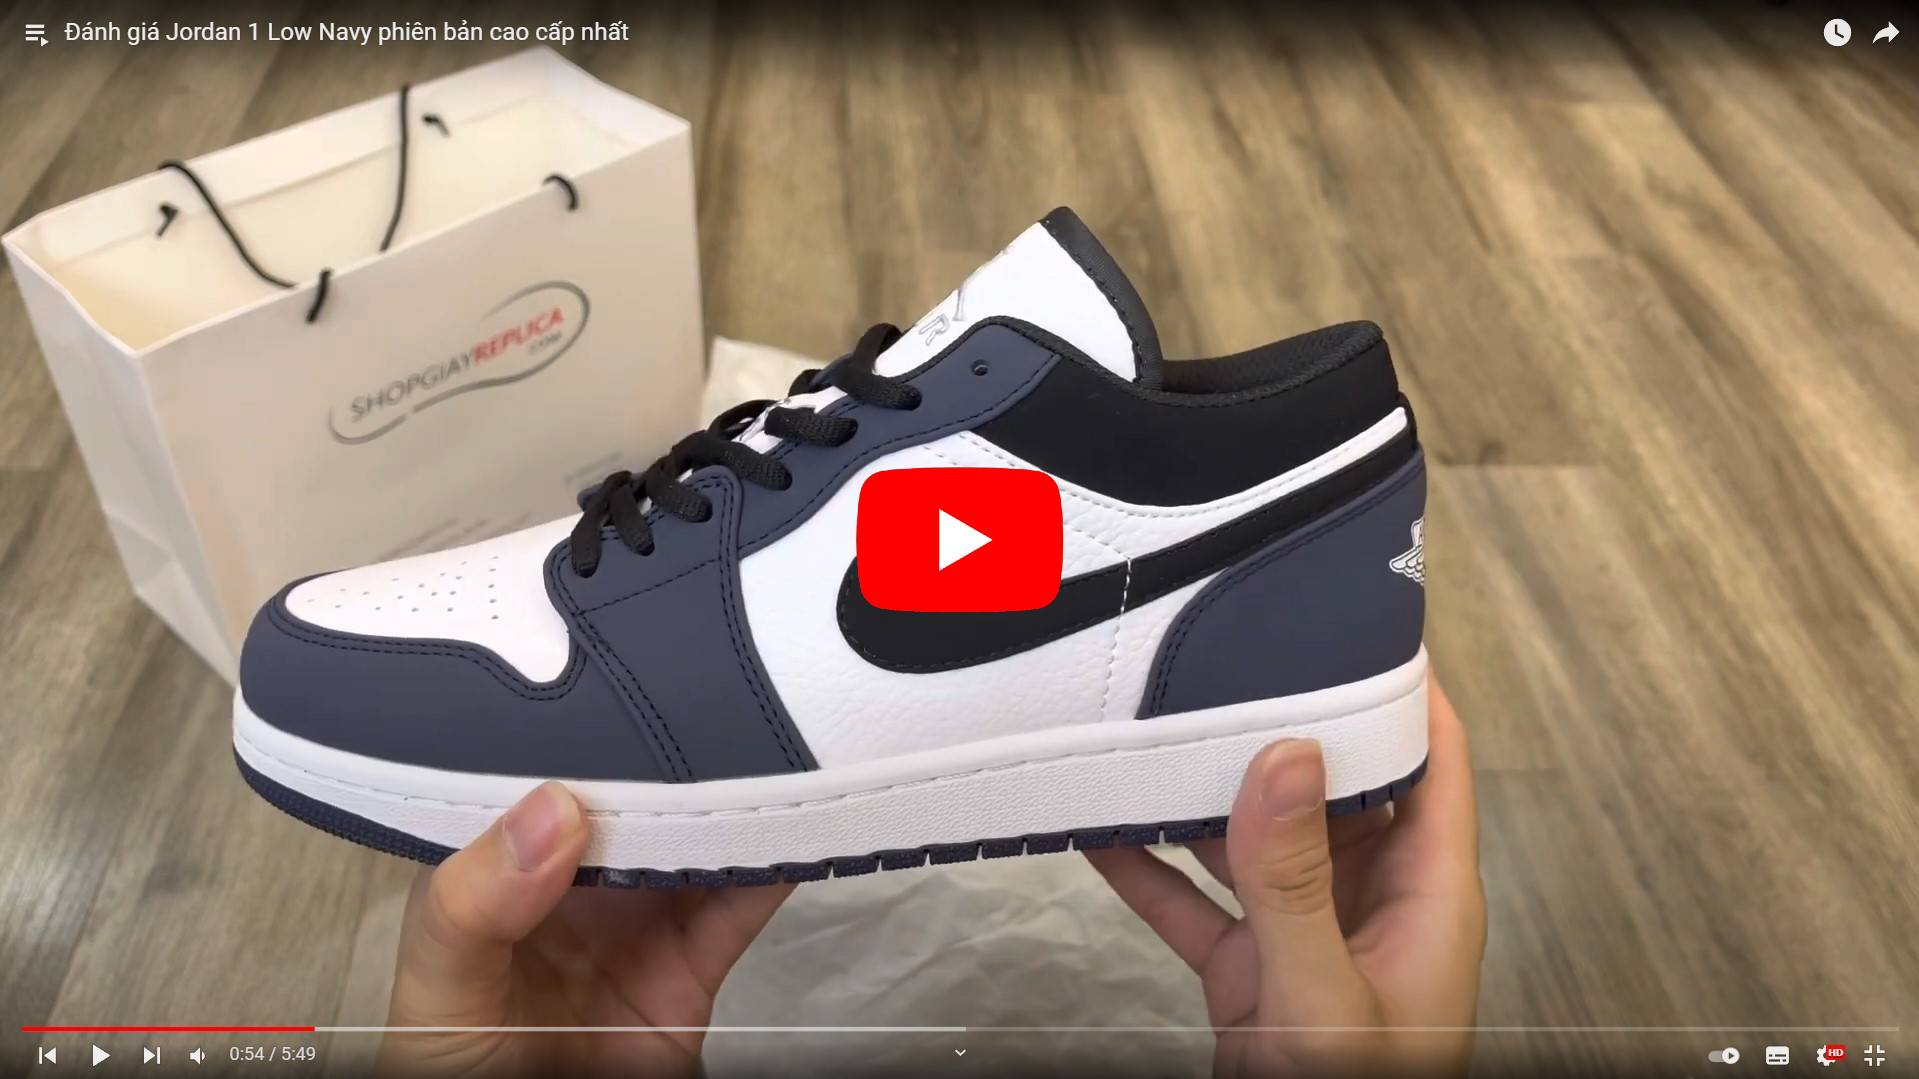 Video Unbox Nike Air Jordan 1 Retro Low Navy